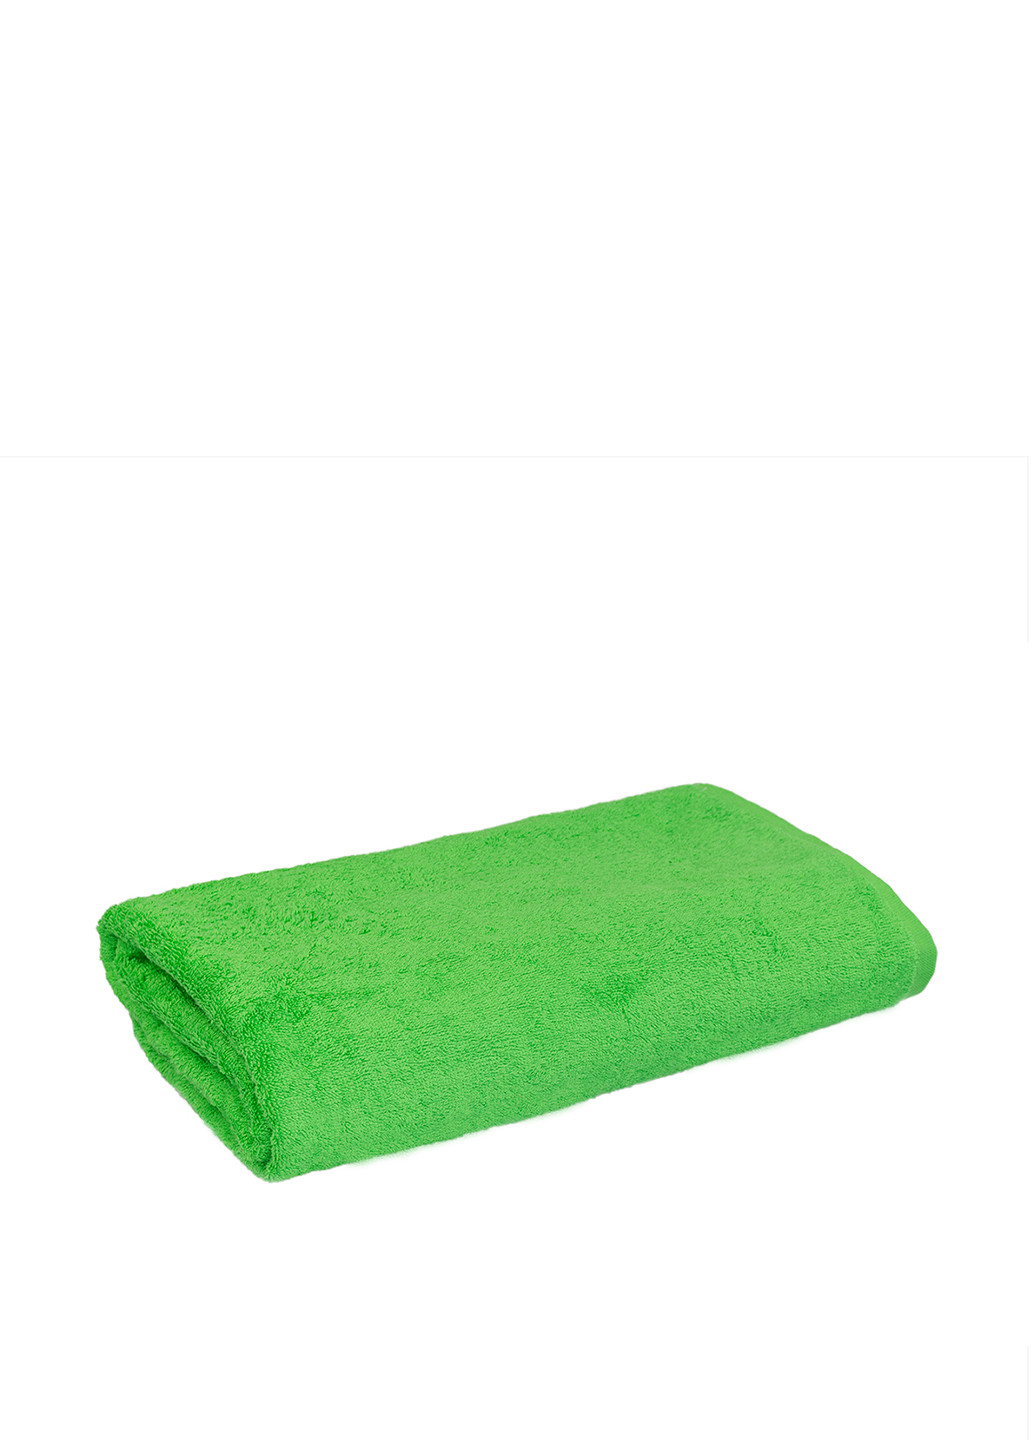 No Brand полотенце, 70х140 см однотонный зеленый производство - Туркменистан